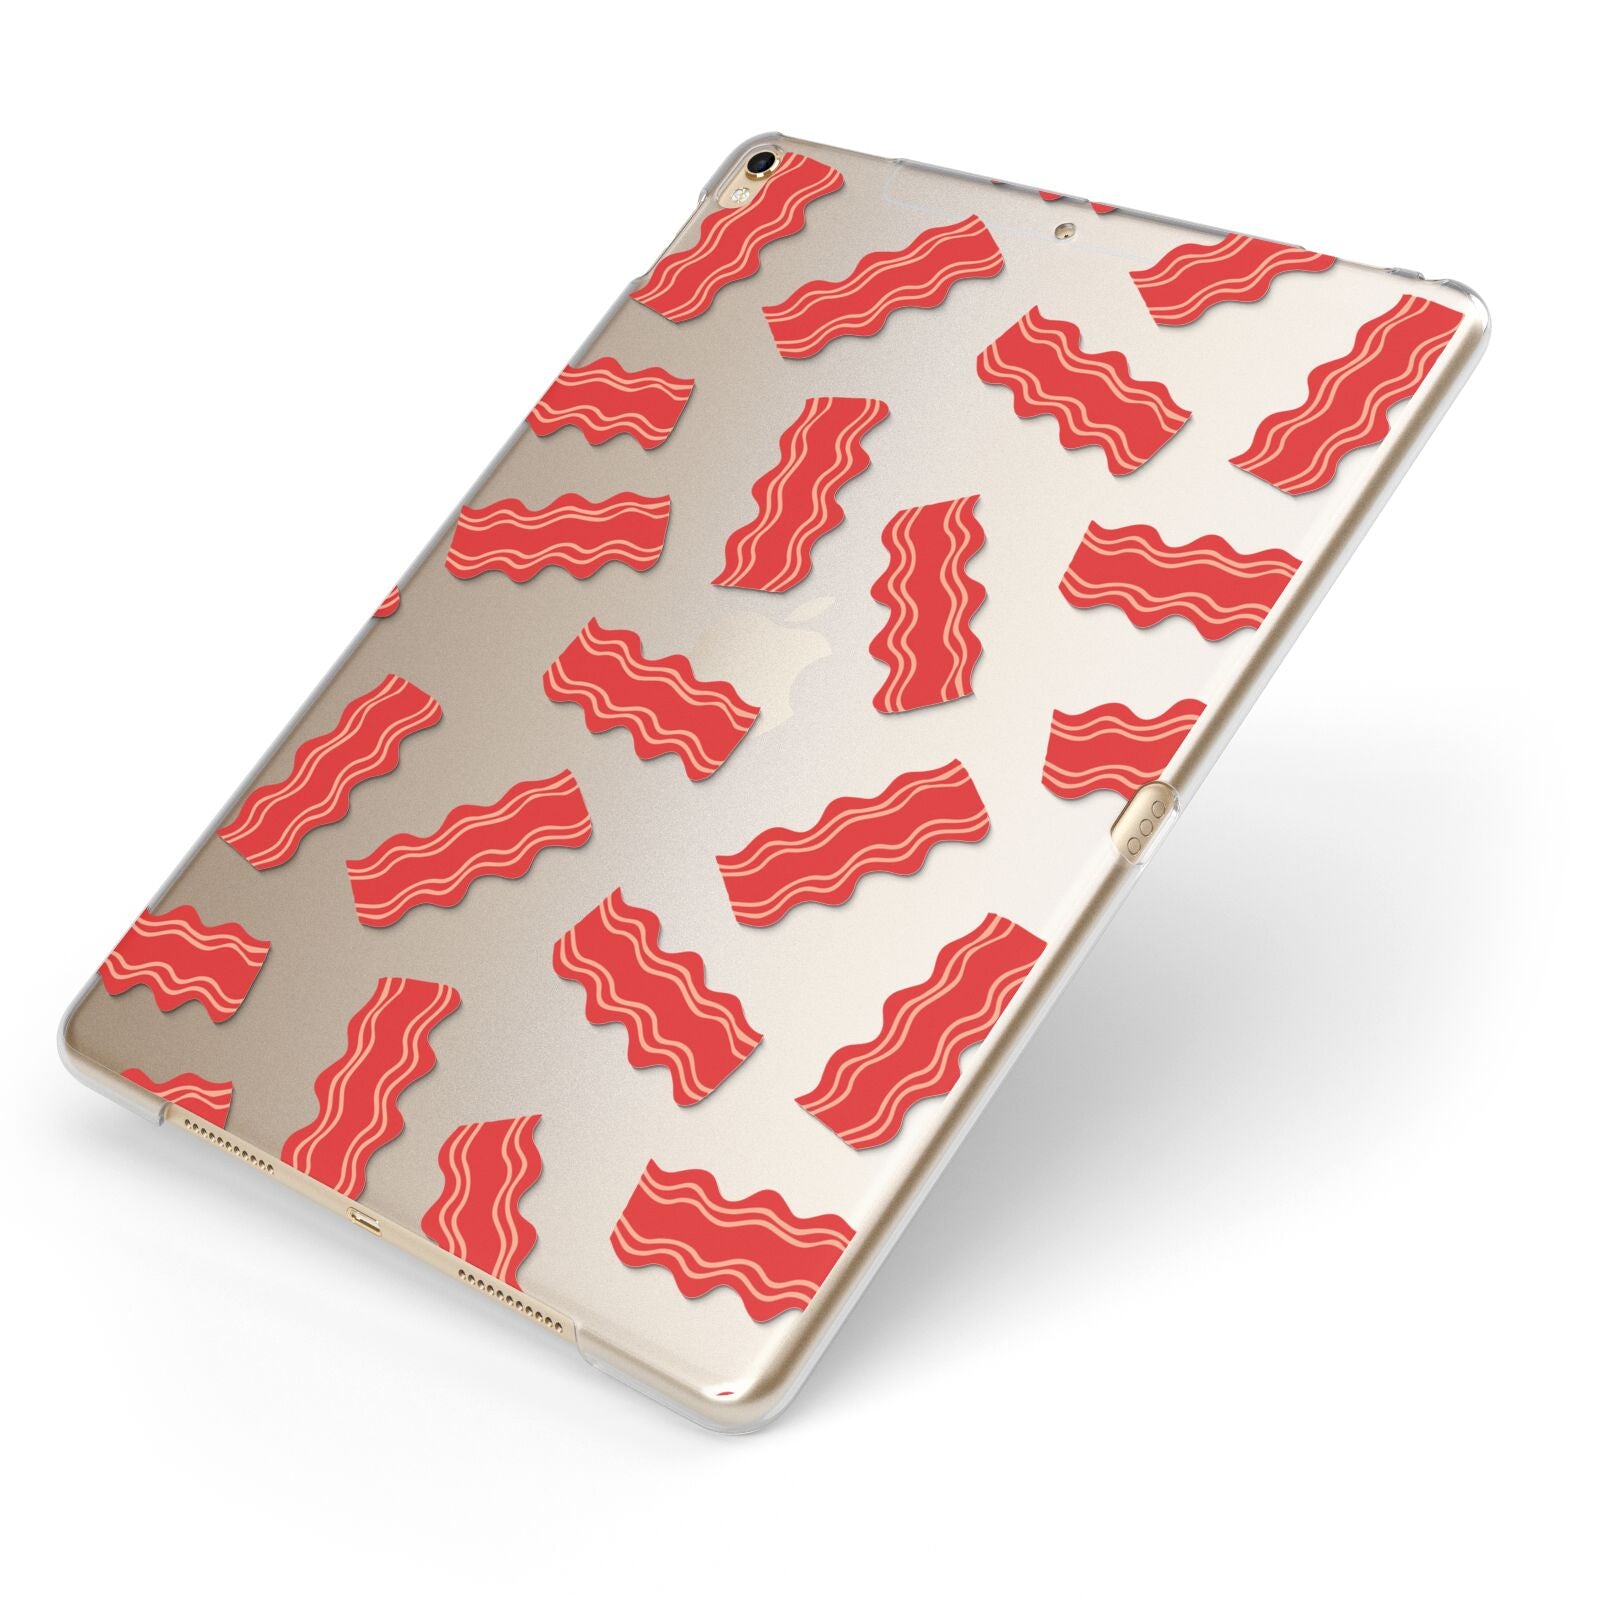 Bacon Apple iPad Case on Gold iPad Side View